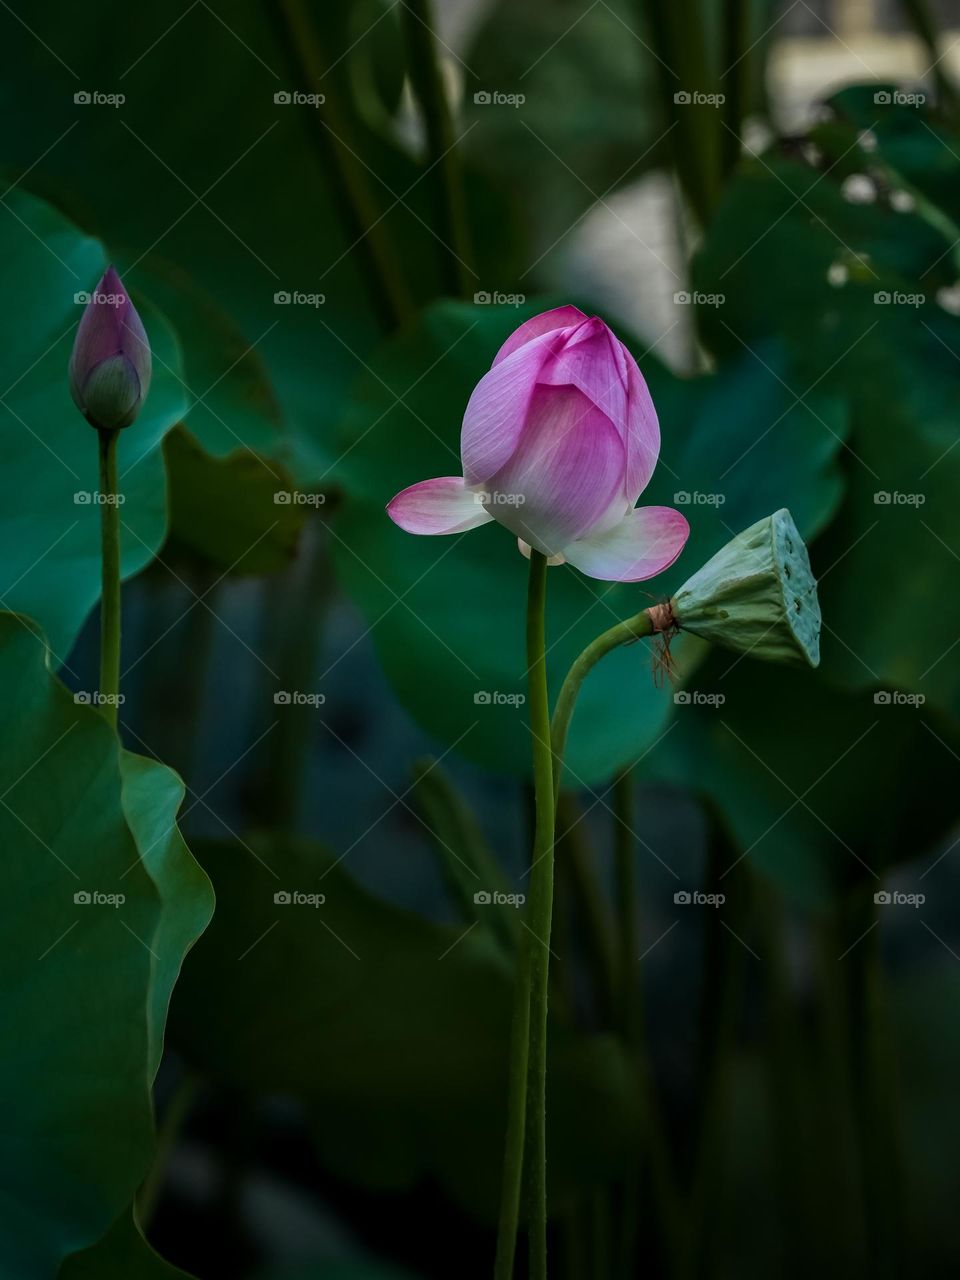 Lotus creation of nature 